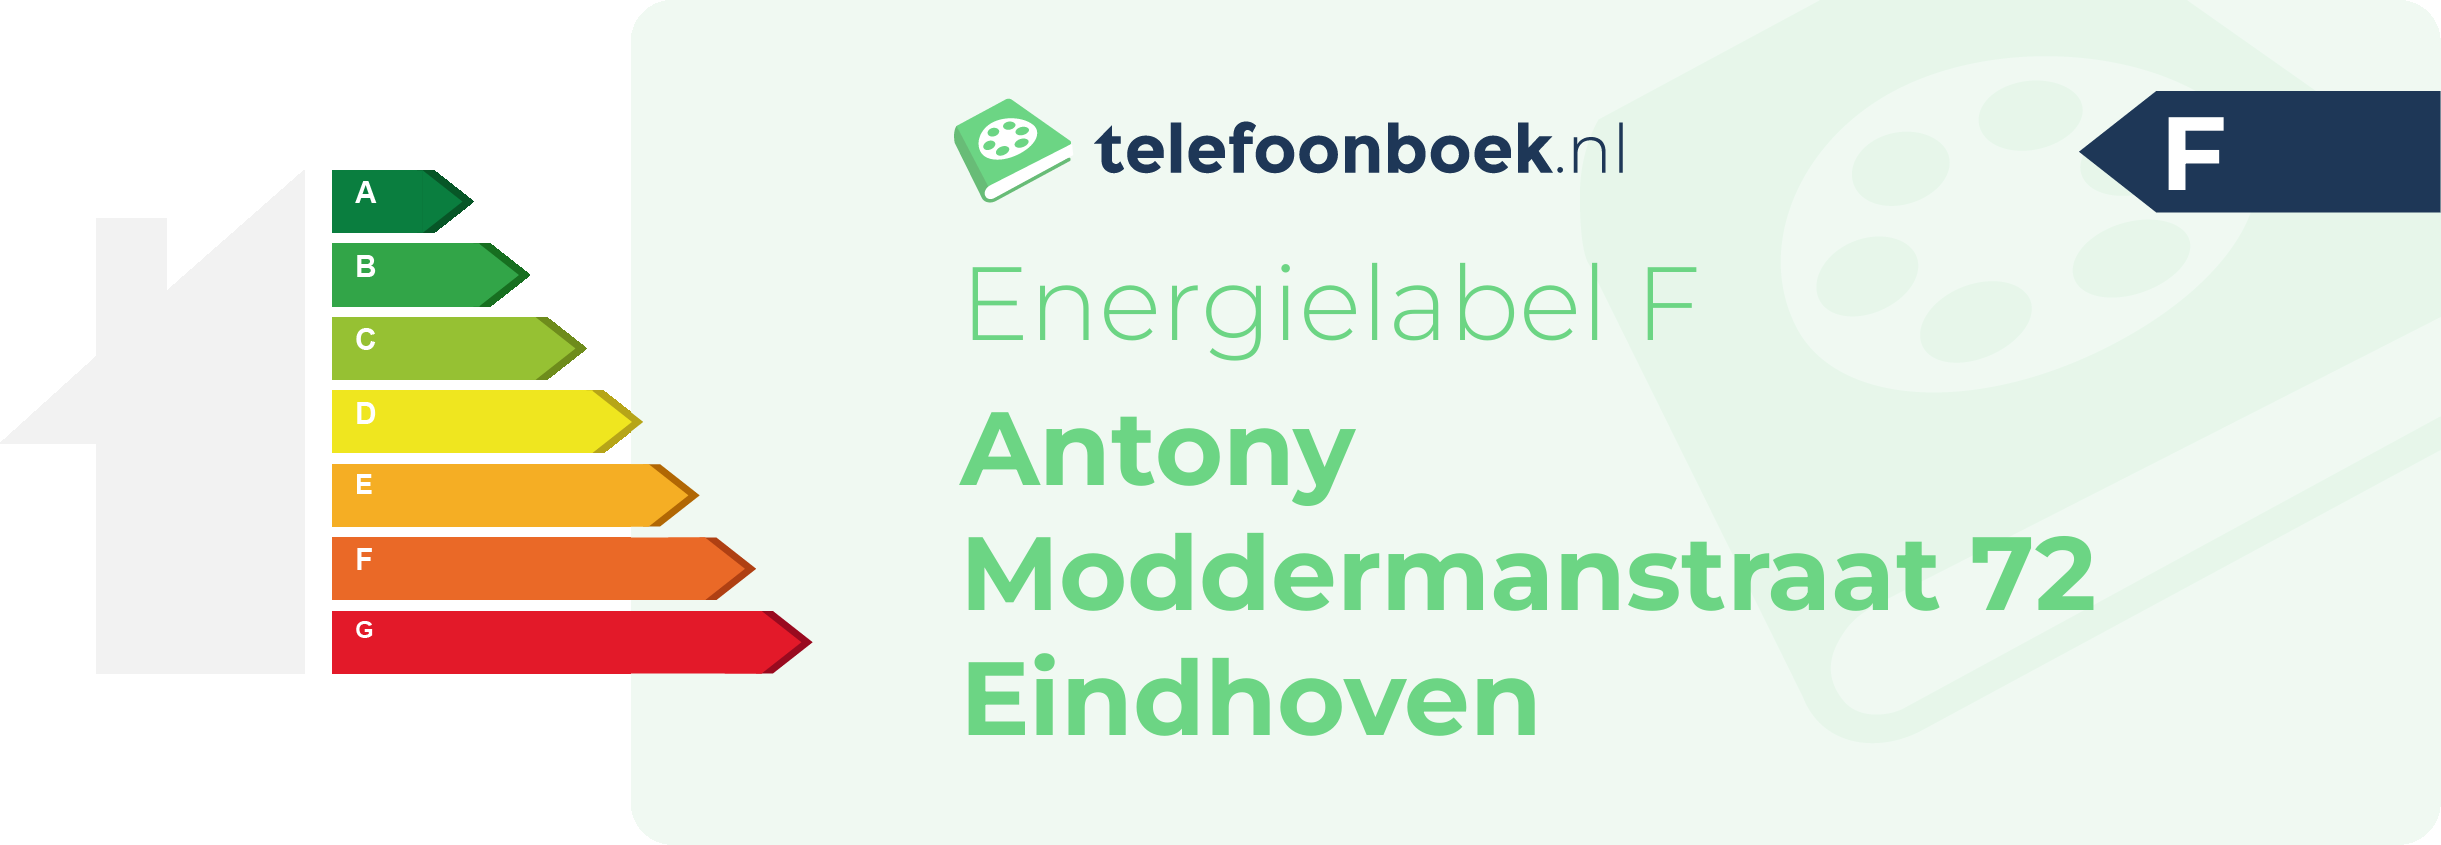 Energielabel Antony Moddermanstraat 72 Eindhoven